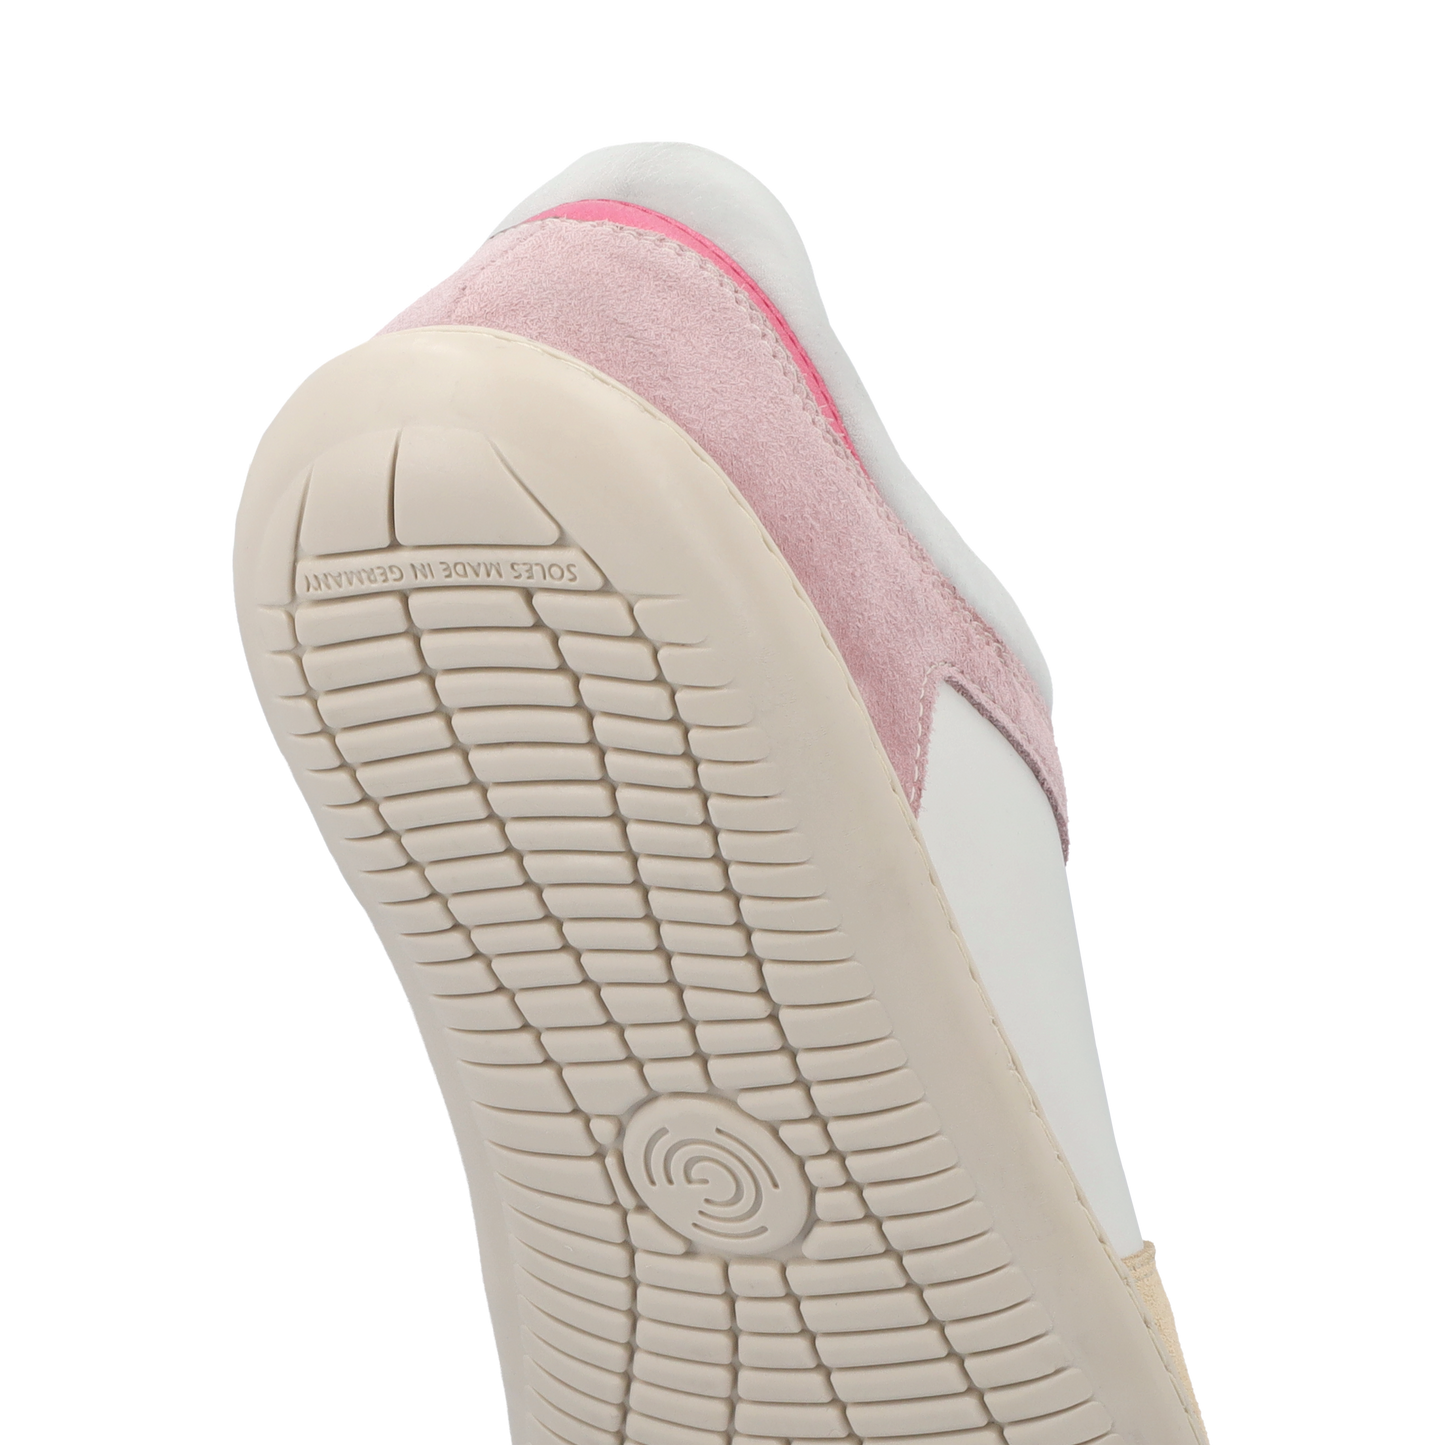 Groundies Orlando Women barfods sneakers til kvinder i farven off-white / beige / pink, bagfra